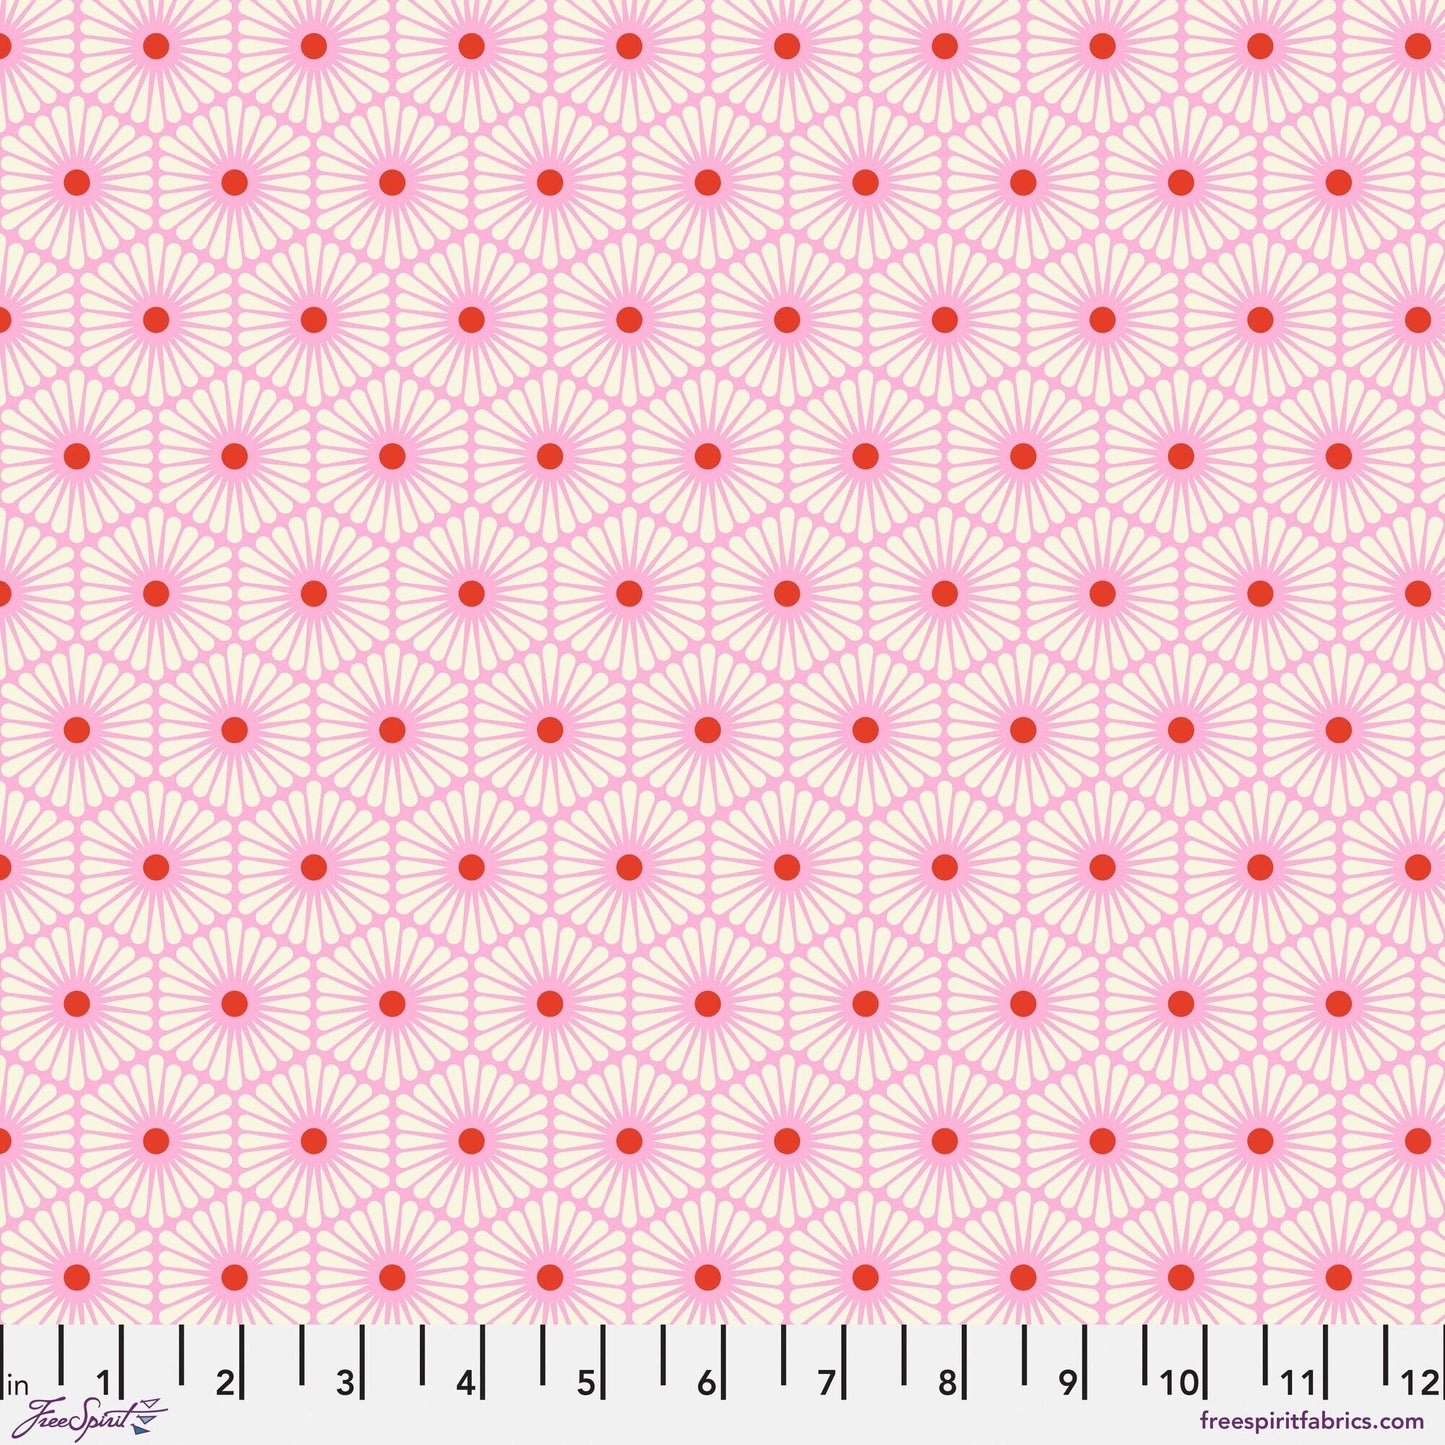 Daisy Chain Blossom Besties Tula Pink Freespirit Fabrics Fabric Fetish